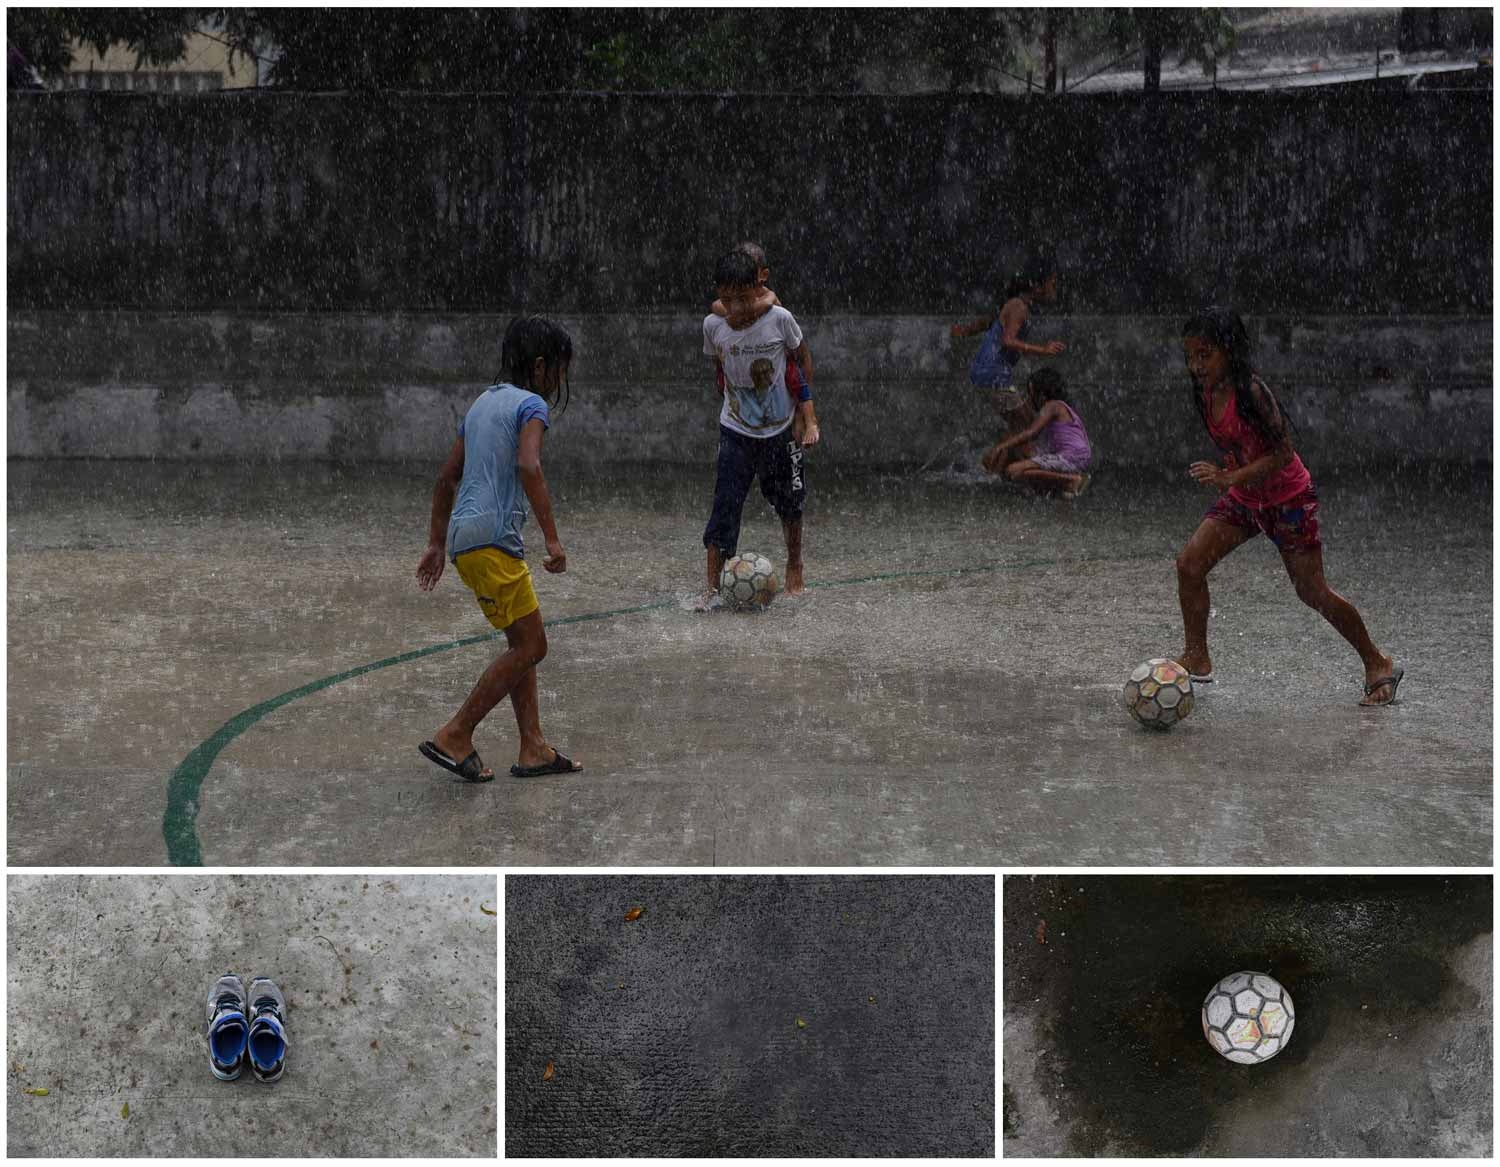  A chuva n&atilde;o &eacute; impedimento para uma partida de futebol entre crian&ccedil;as na Cidade Quezon, nas Filipinas. Foto: Dondi Tawatao - Reuters 